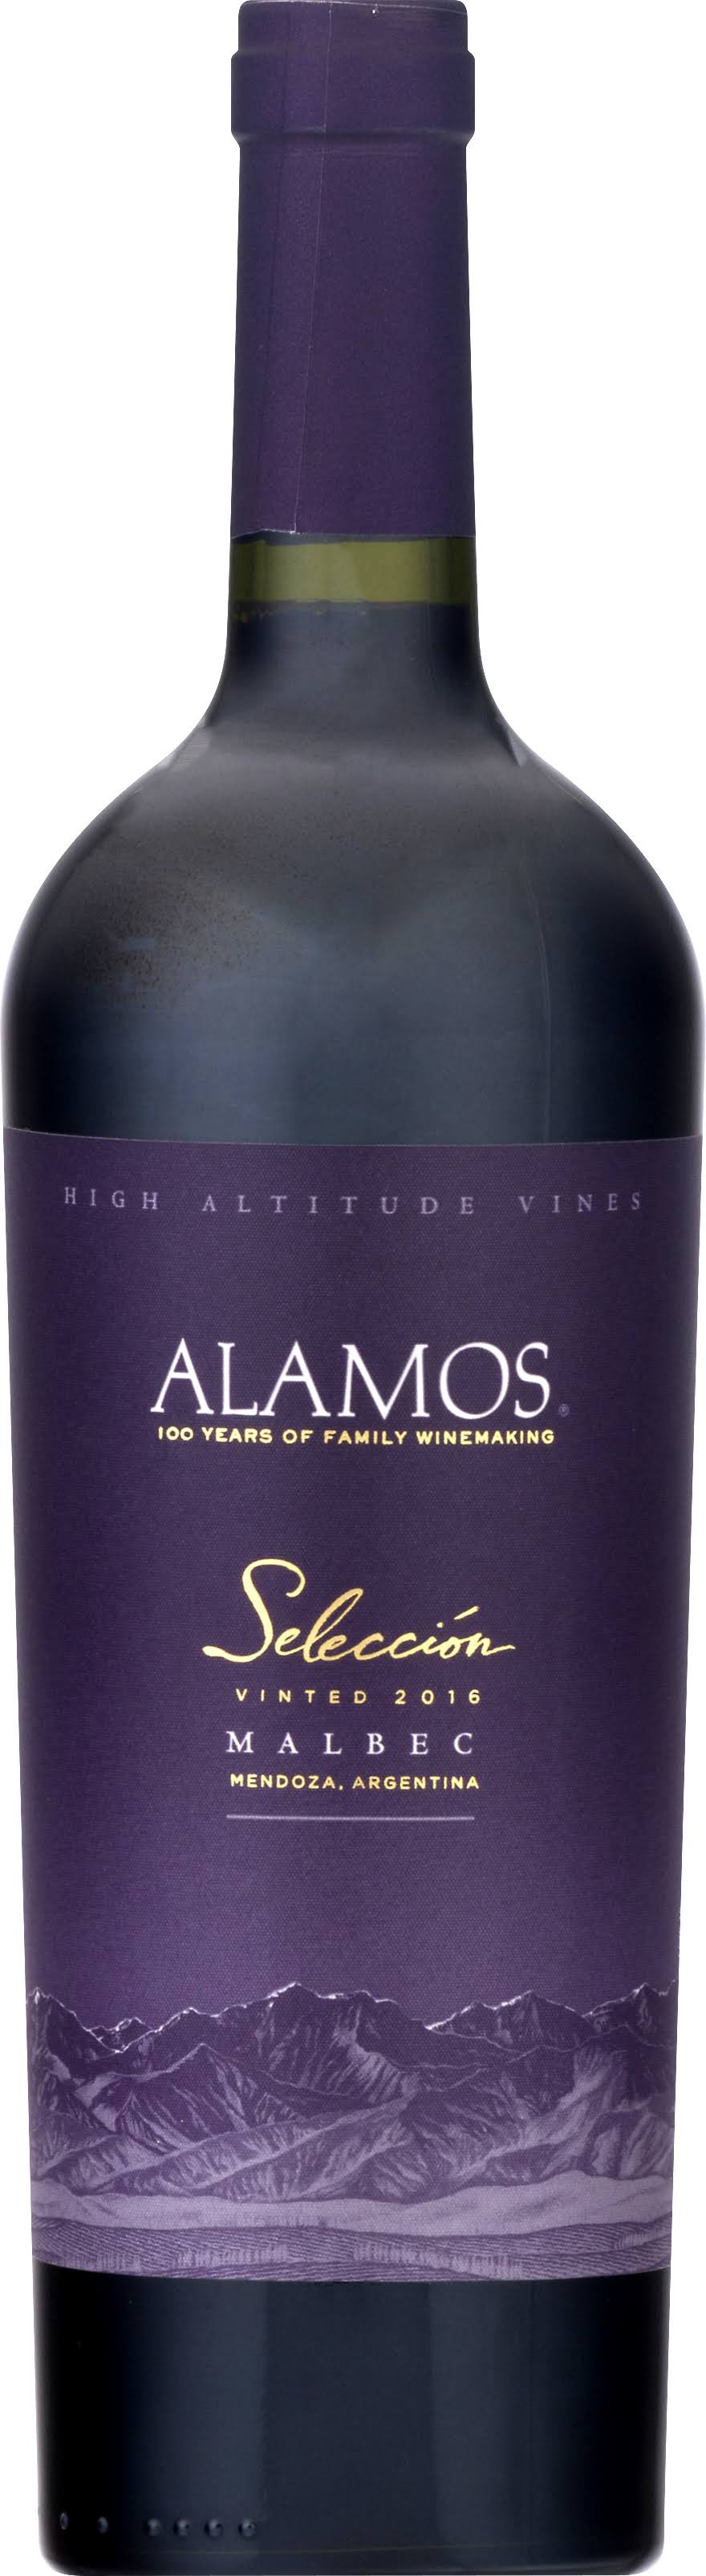 Alamos Wine, Seleccion Malbec, Mendoza Argentina, 2016 - 750 ml